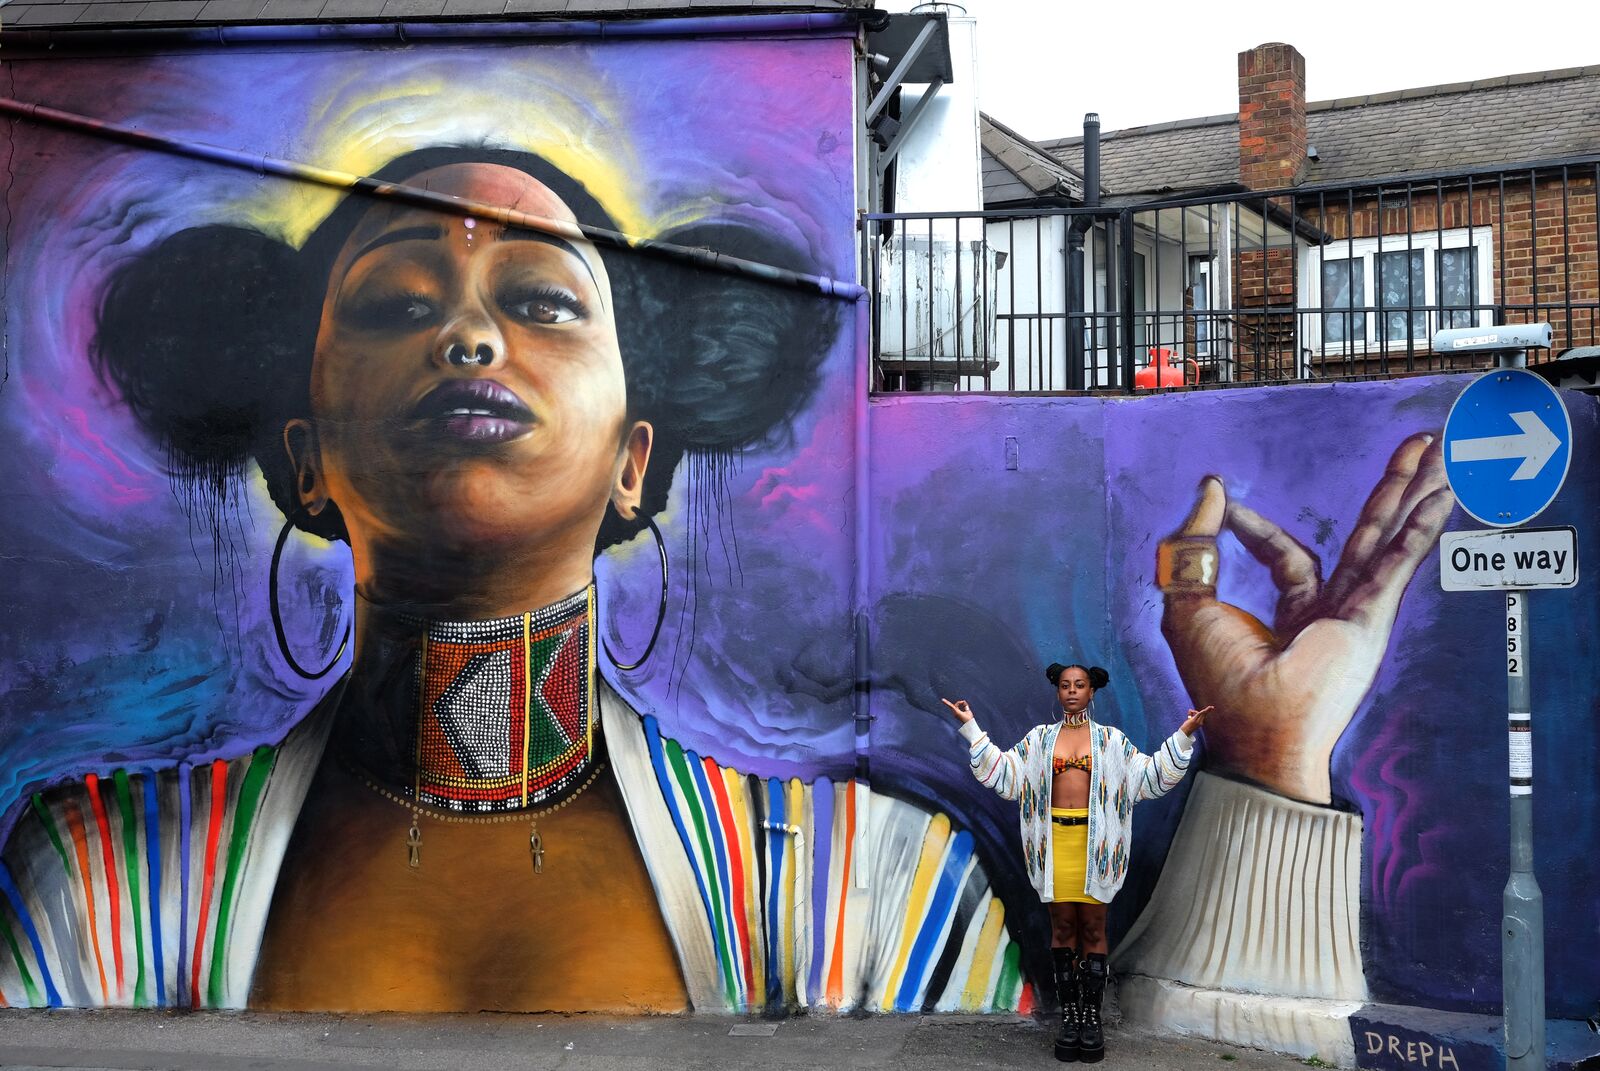 This artist is painting huge murals of black women around London